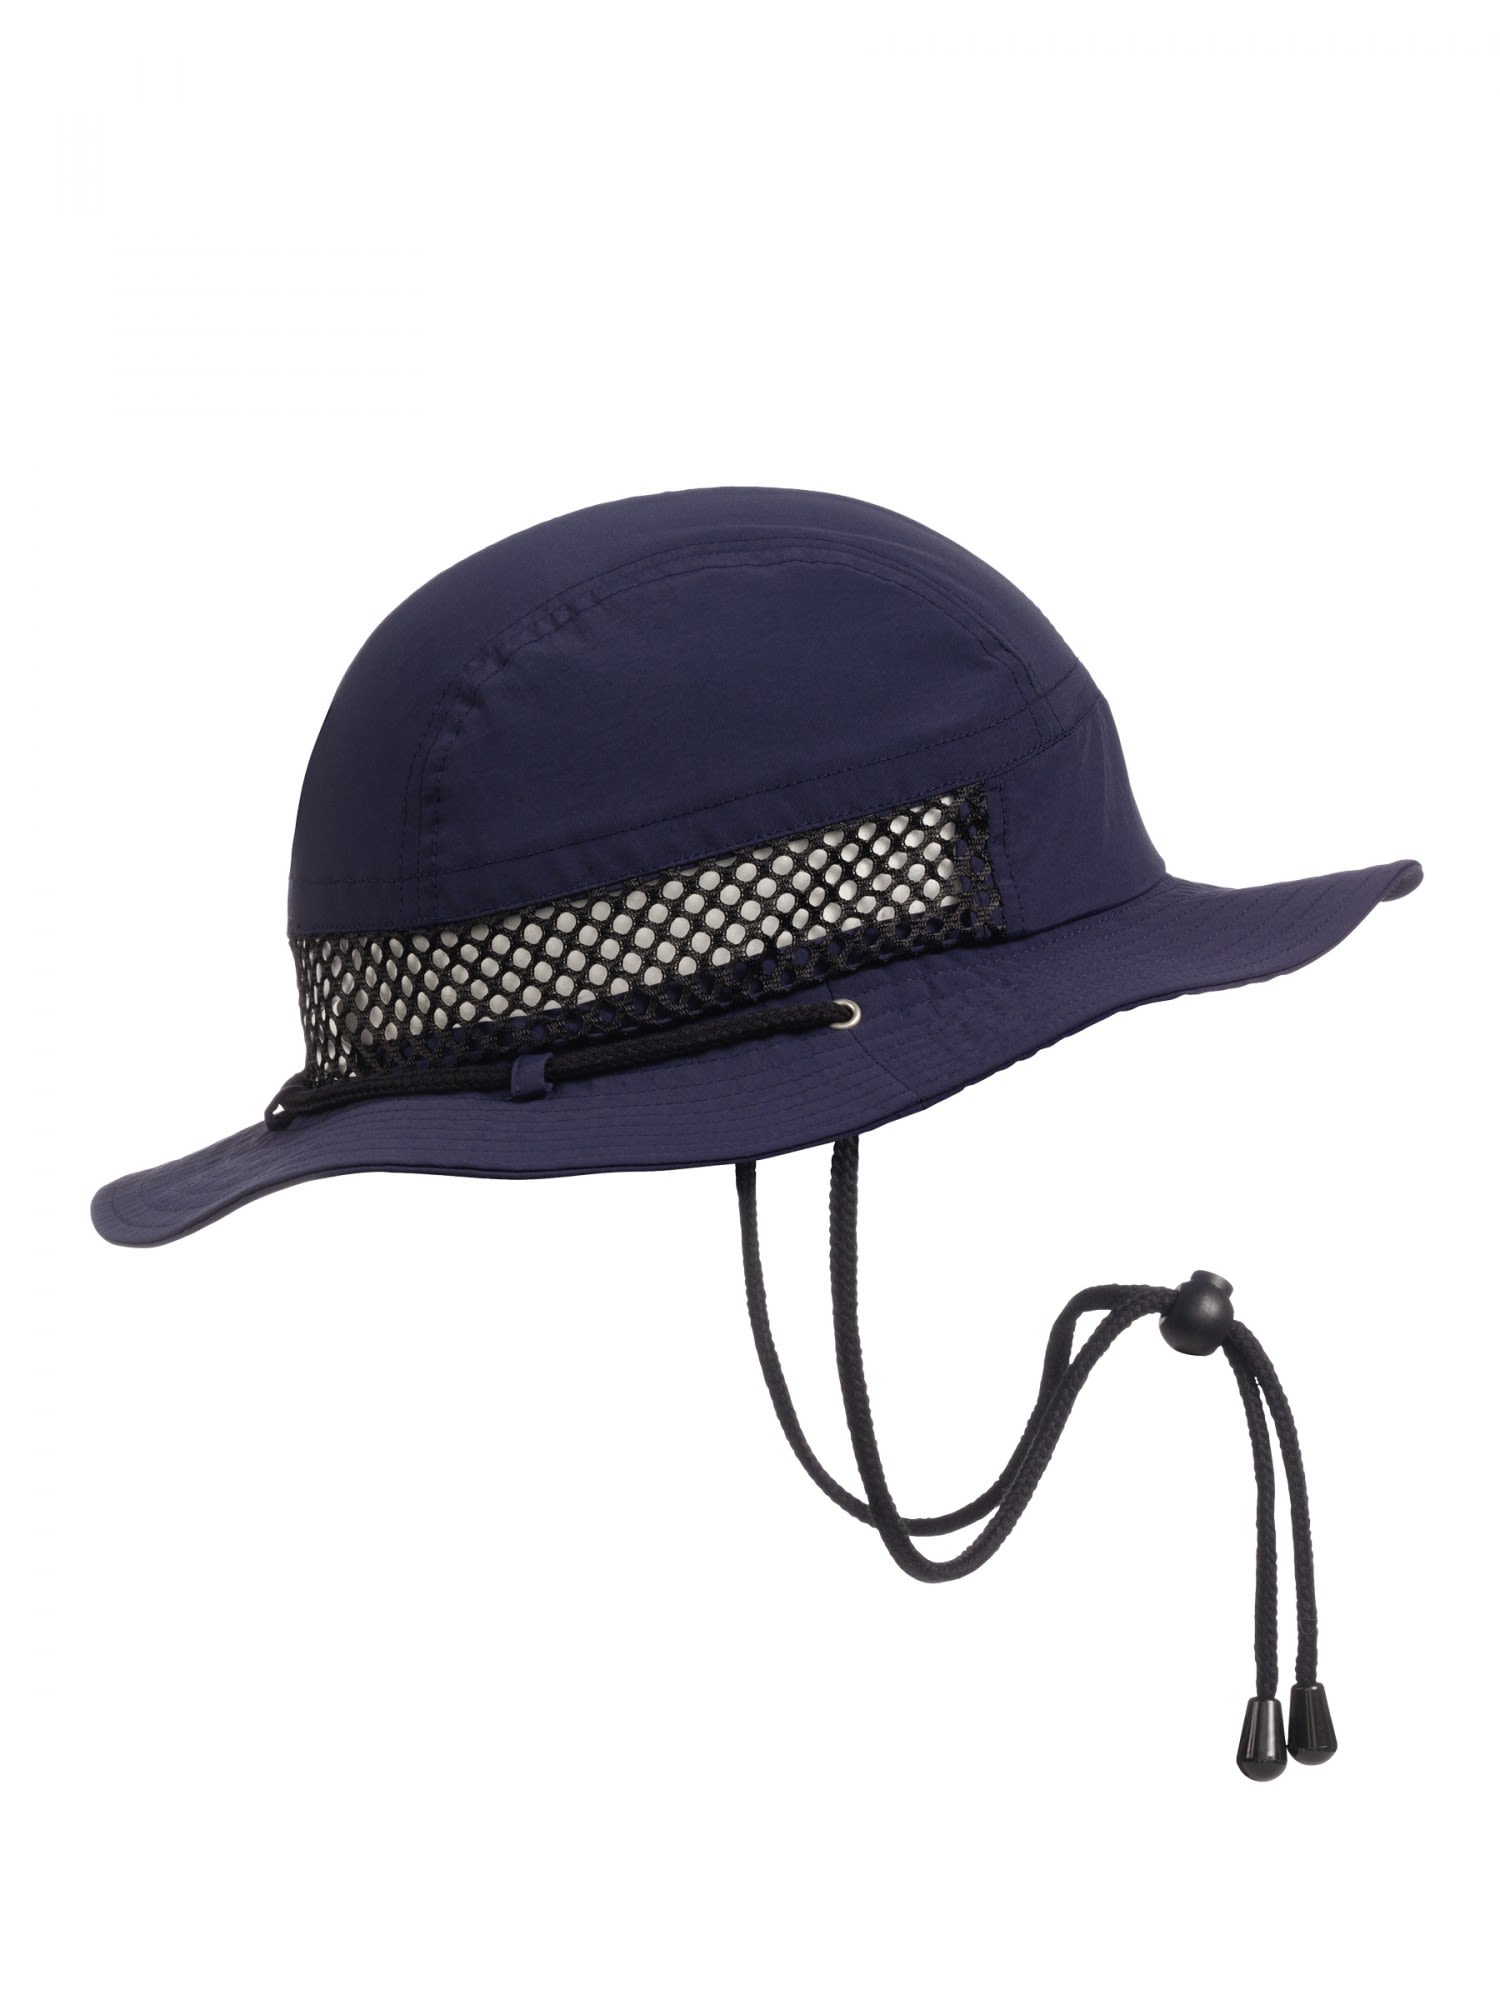 Stöhr Outdoor Mesh Hat